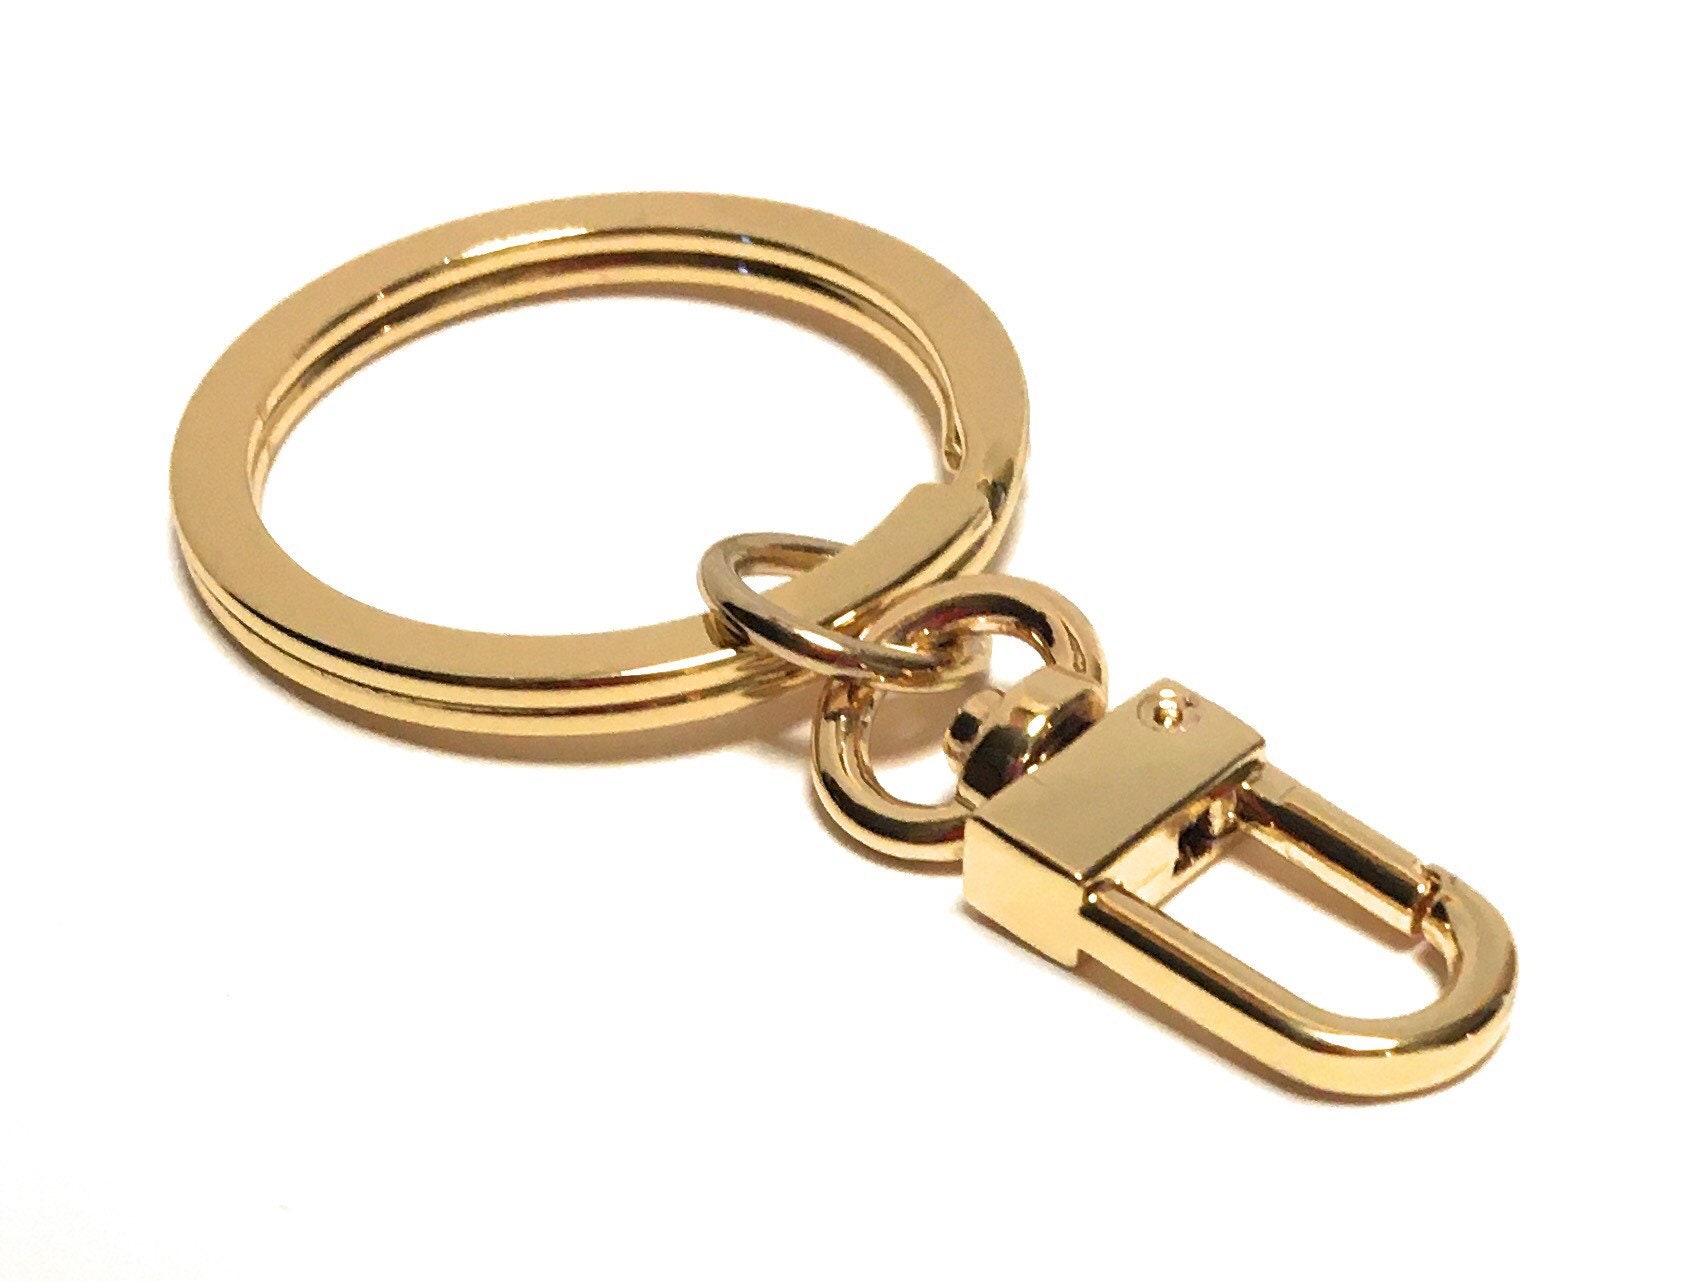 Louis Vuitton 6 Ring Key Holder As a Wristlet www.modelvale.com # louisvuitton #lv #lvkeyhold…